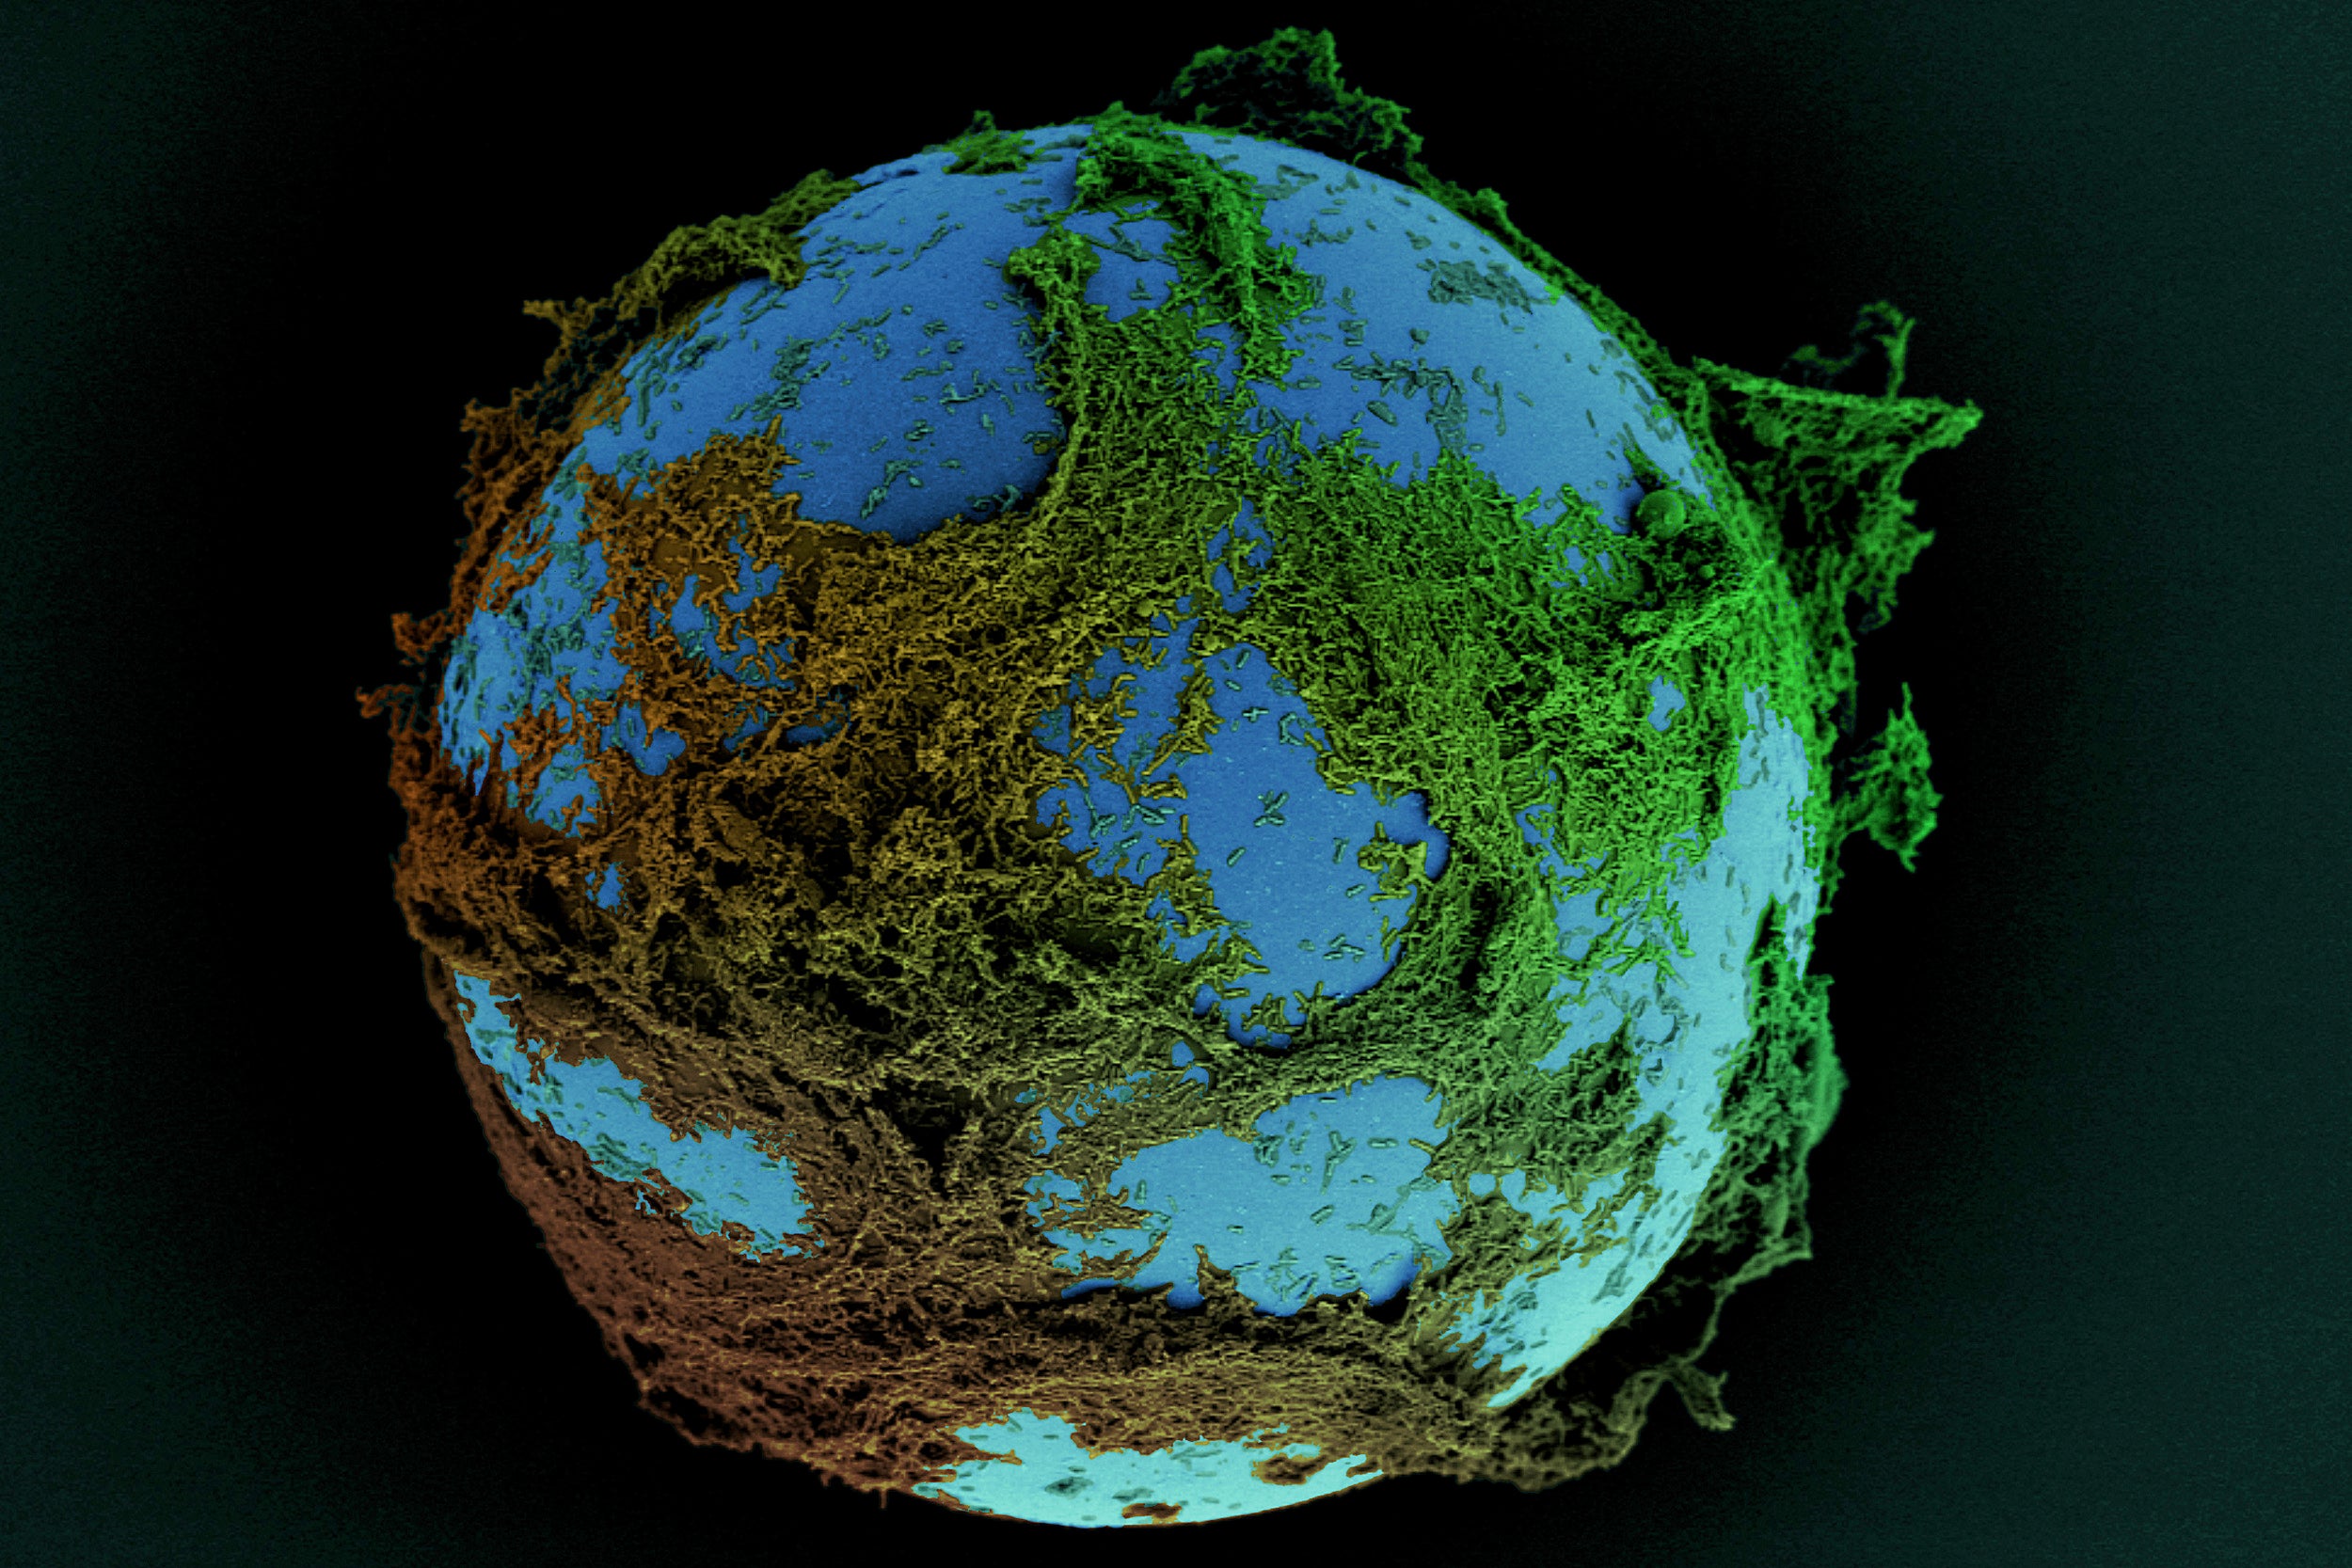 Biofilm resembles globe.